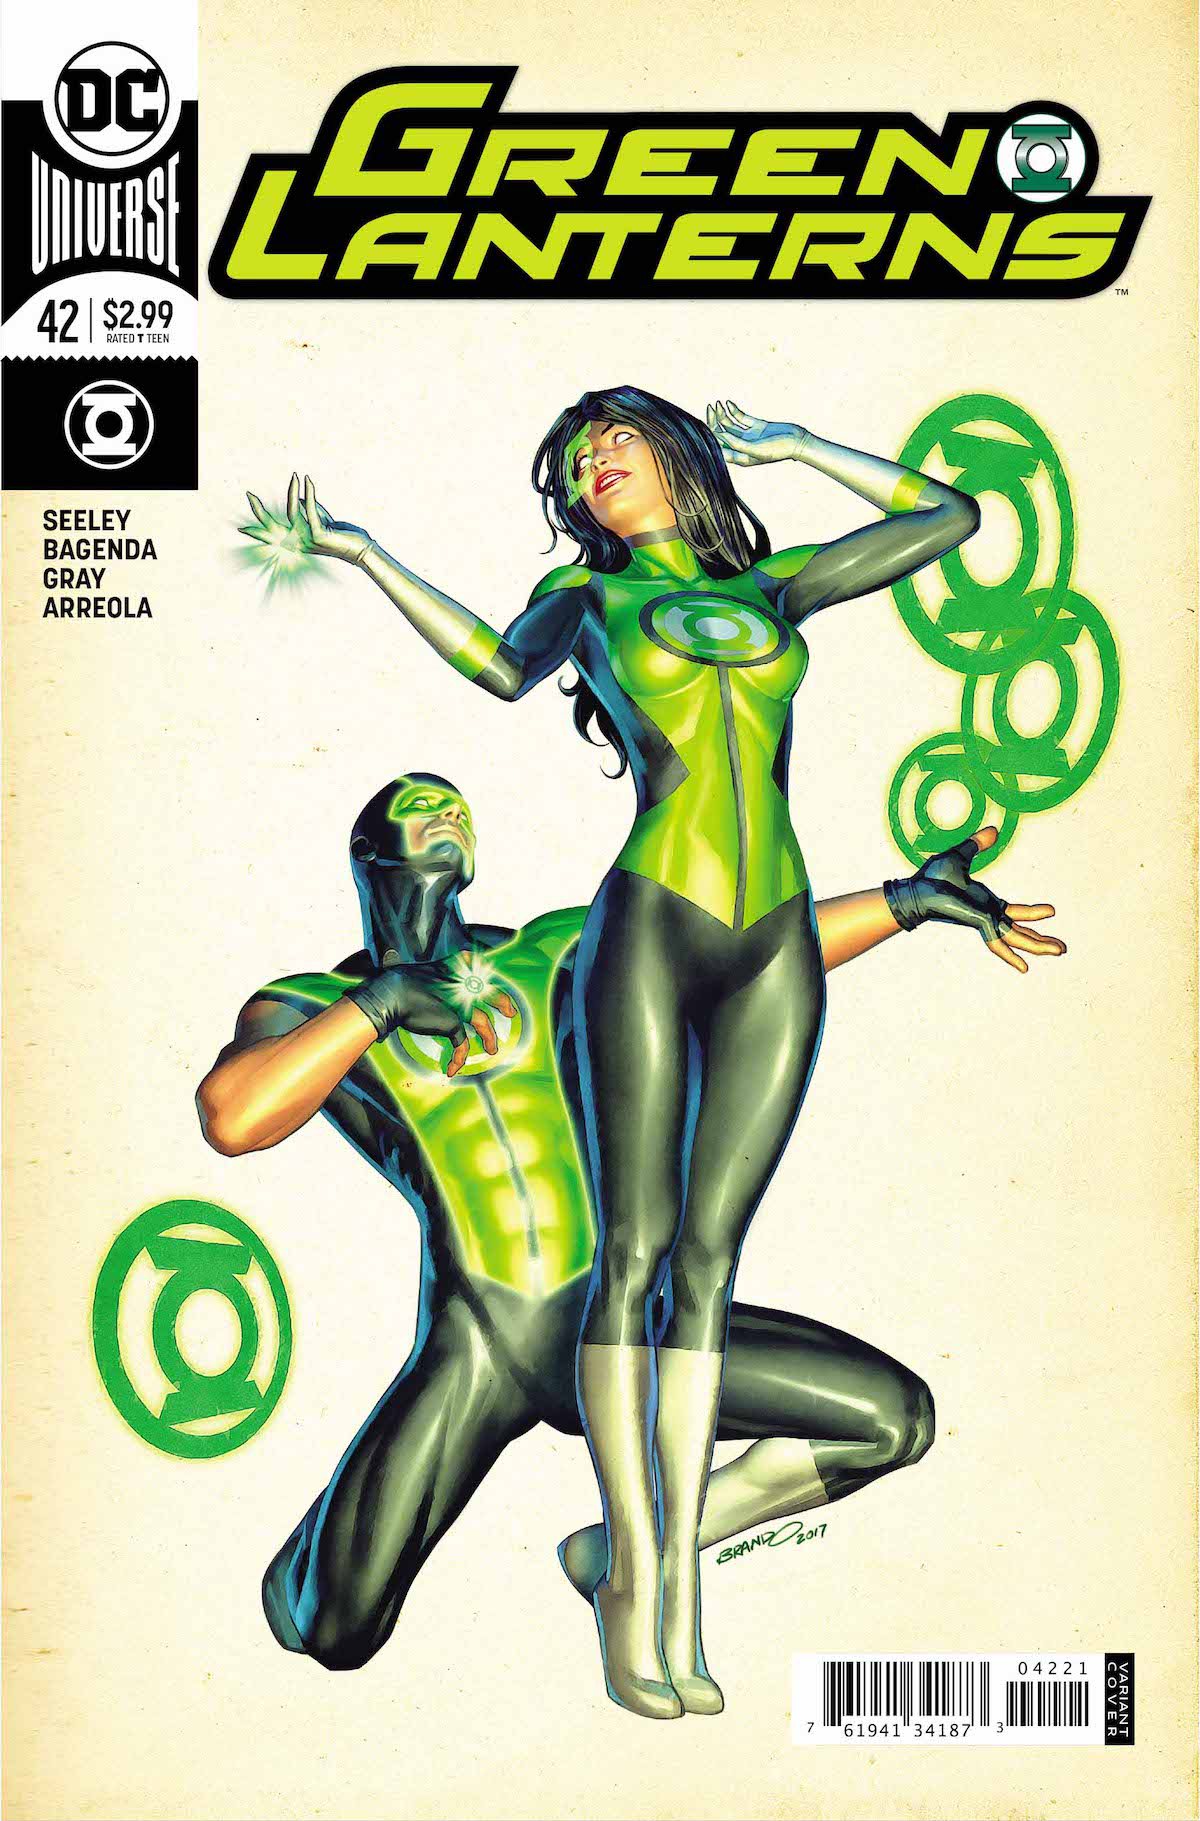 Green Lanterns #42 variant cover